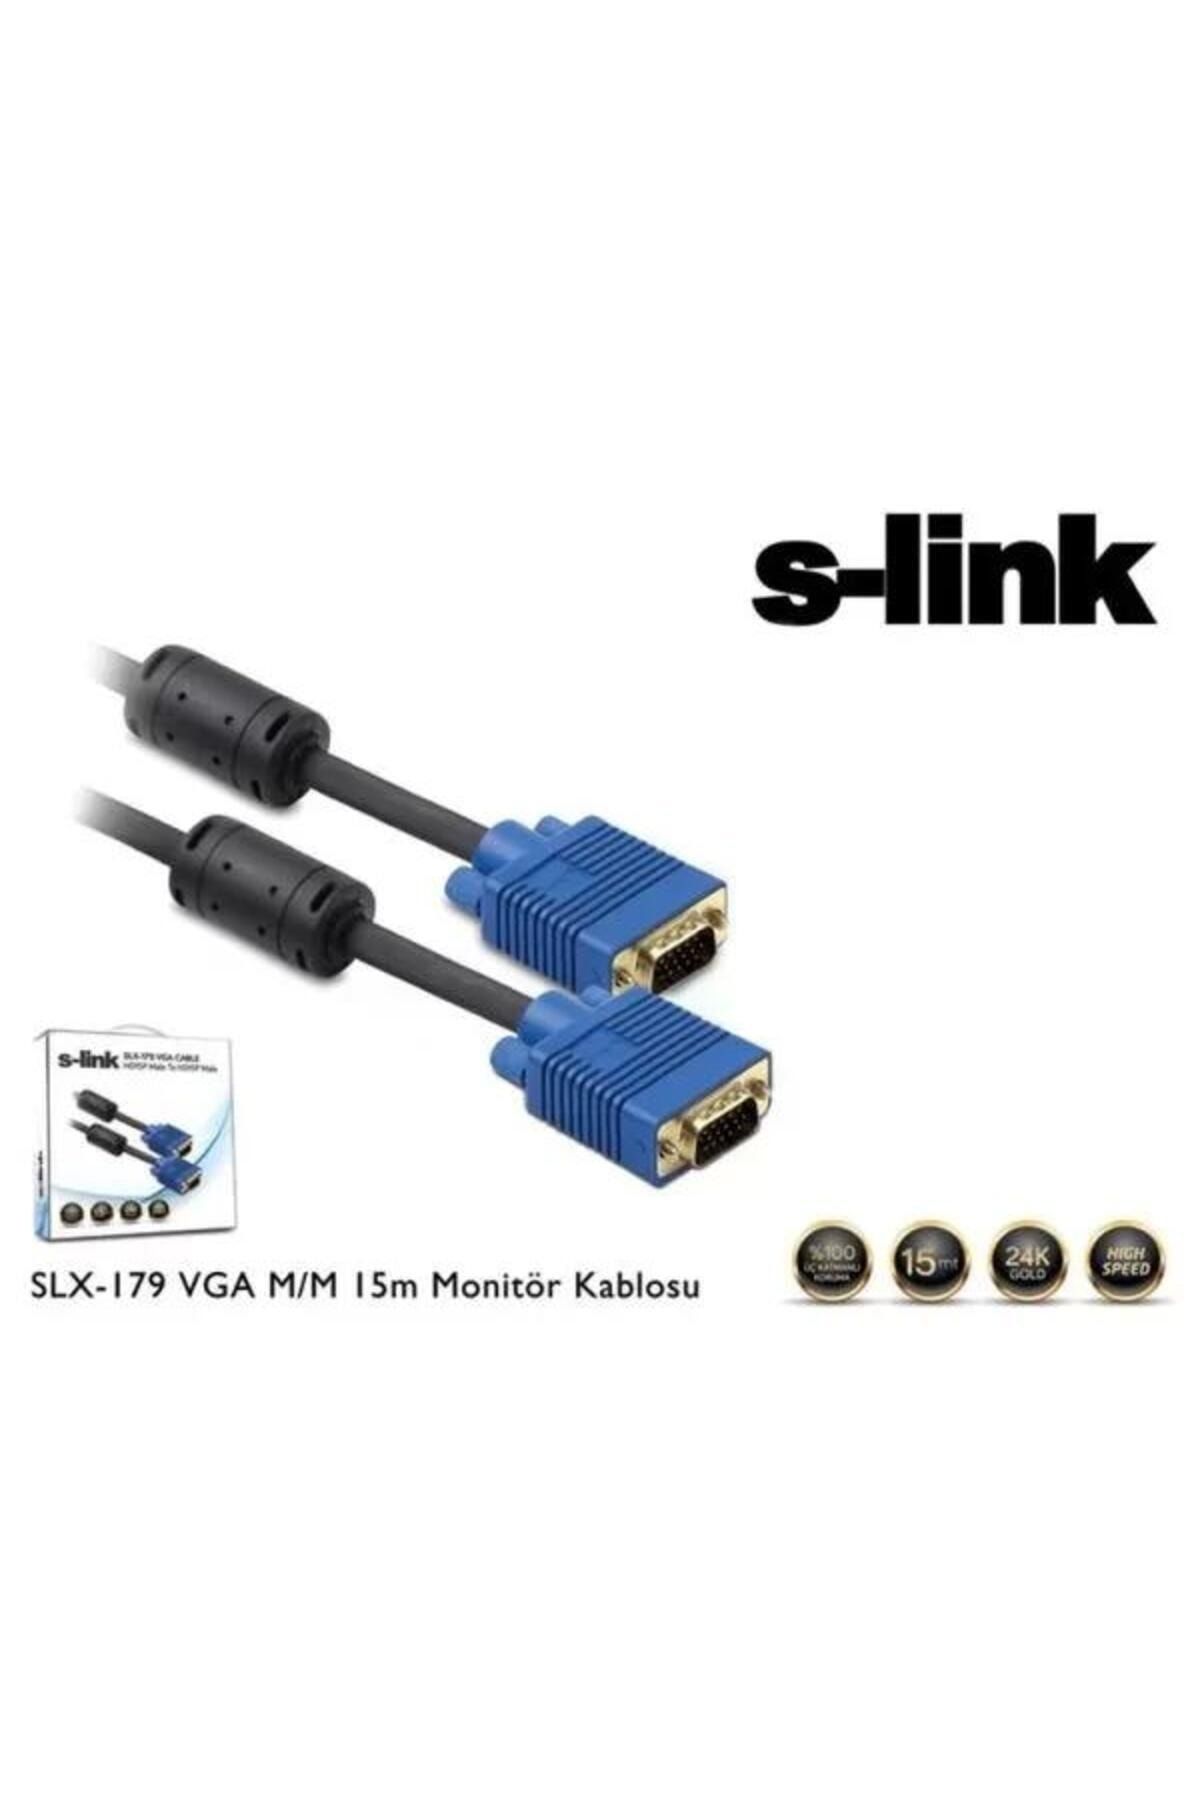 S-Link S Link Slx 179 Vga M M 15M Monitör Kablosu / S Link